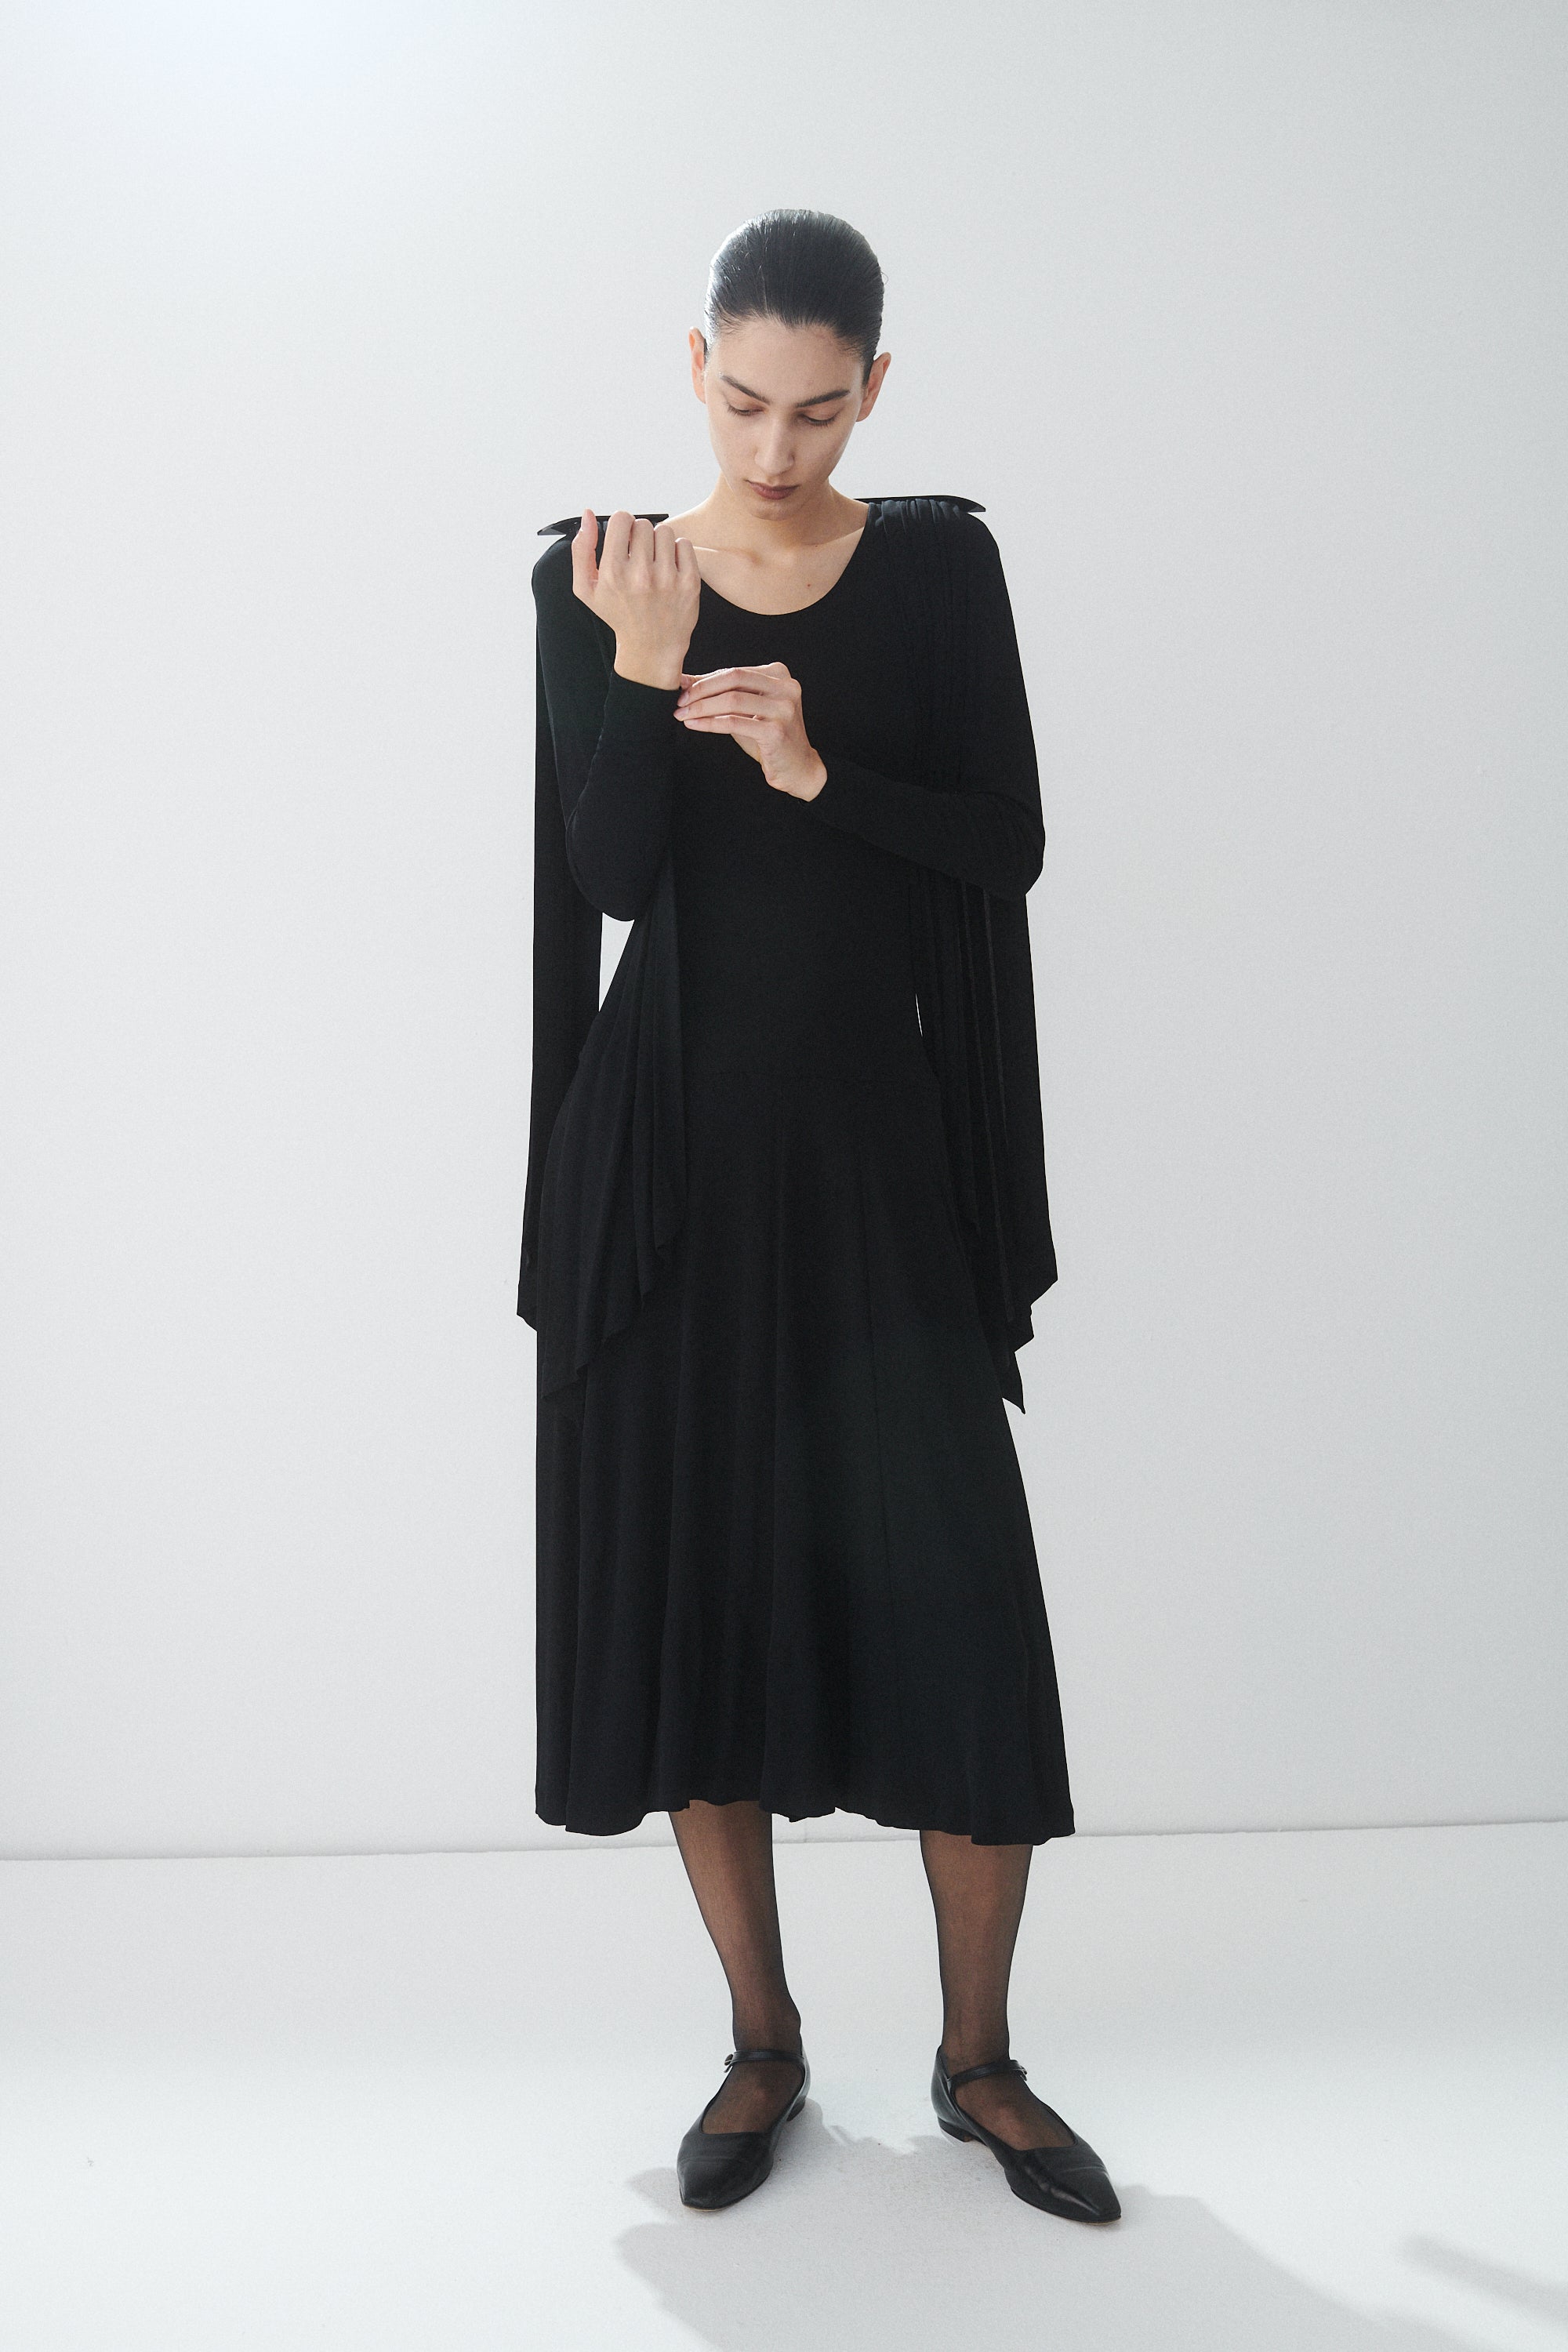 Jean Muir Black Draped Dress - Desert Vintage